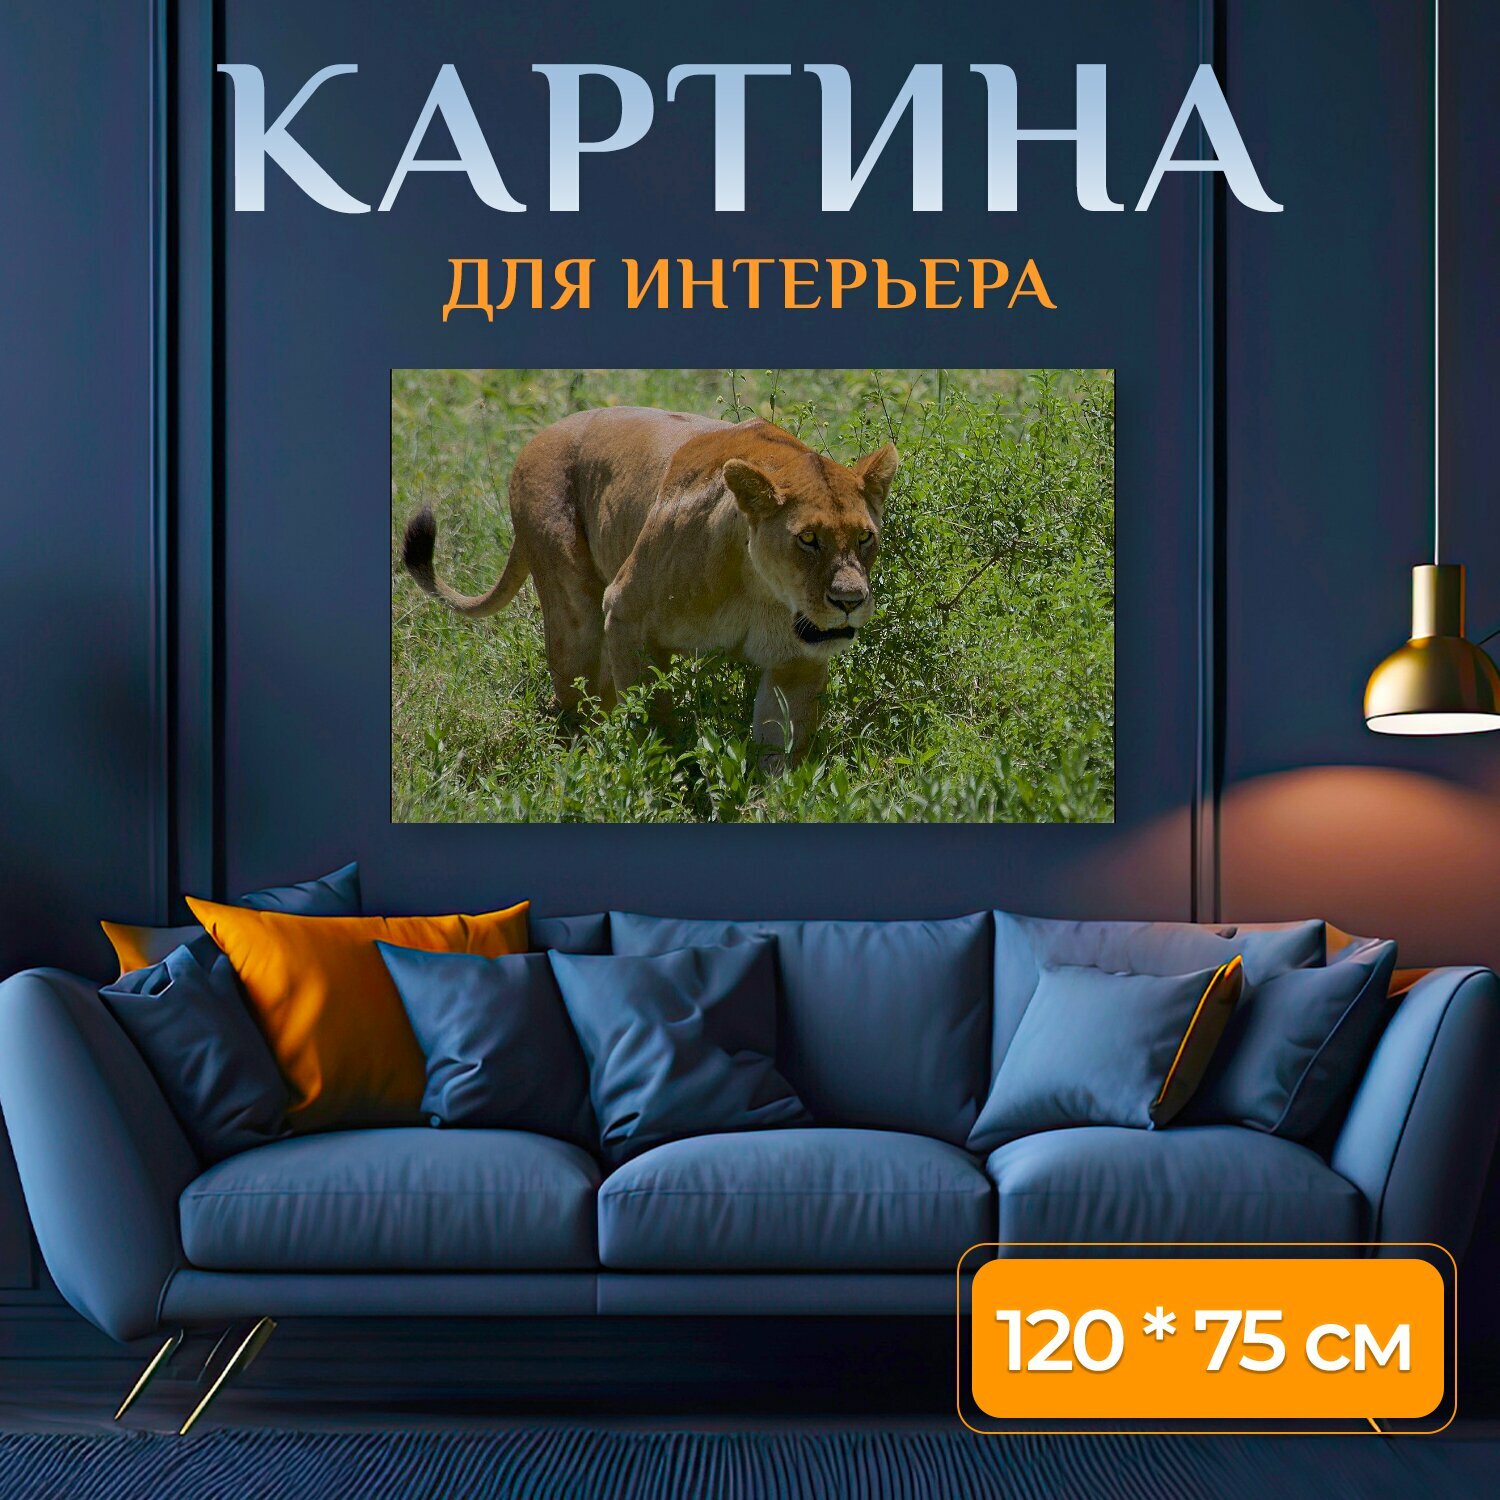 Картина на холсте "Львица, лев, сафари" на подрамнике 120х75 см. для интерьера